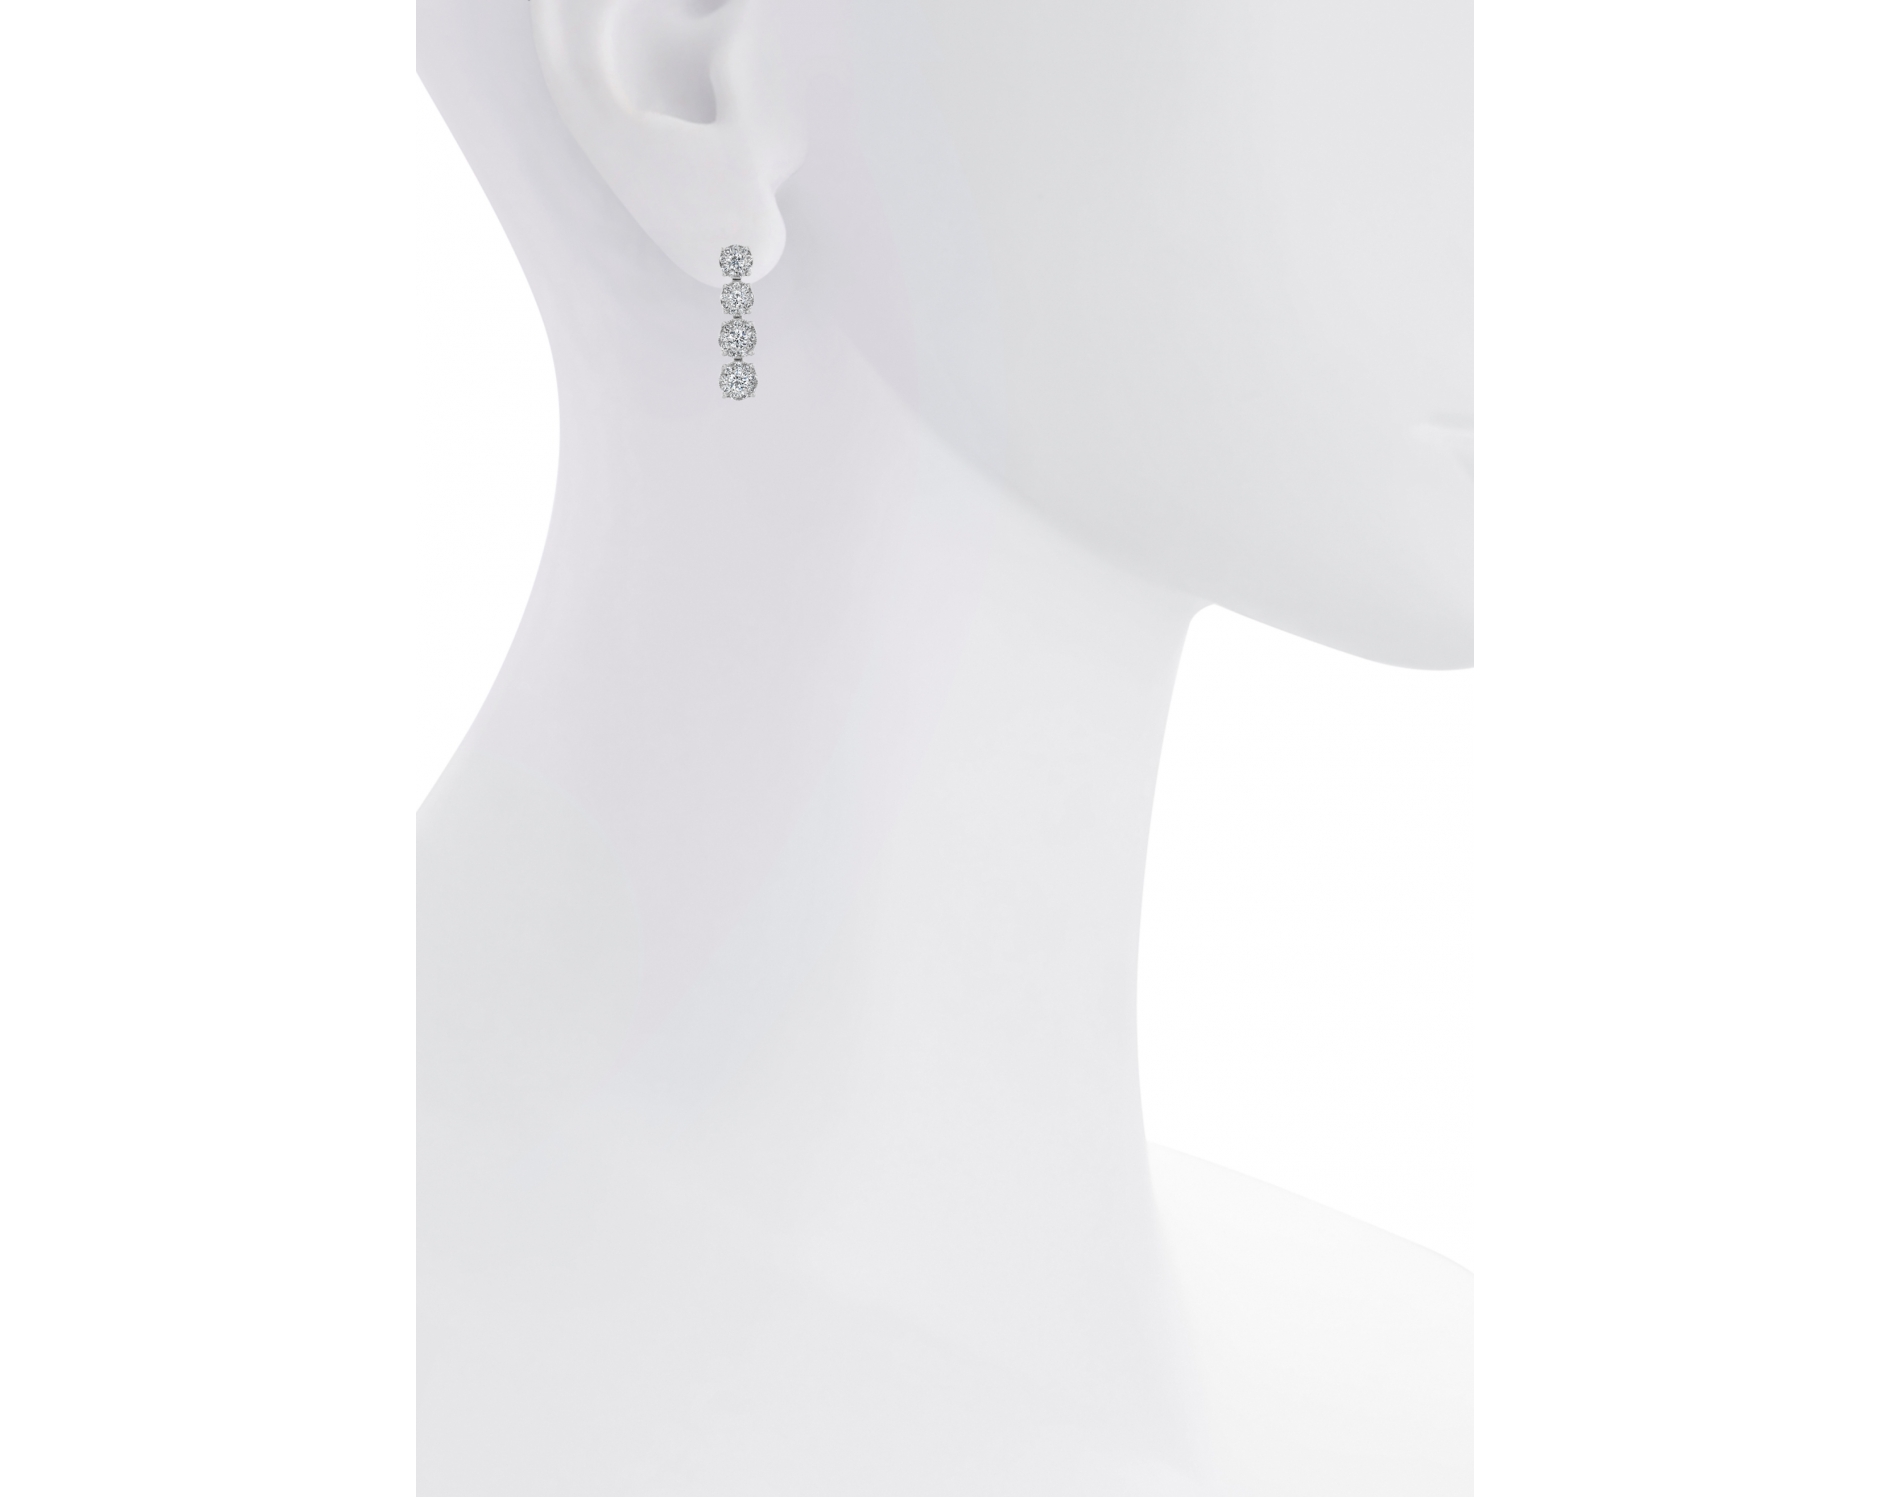 18k white gold halo illusion set hanging diamond earrings